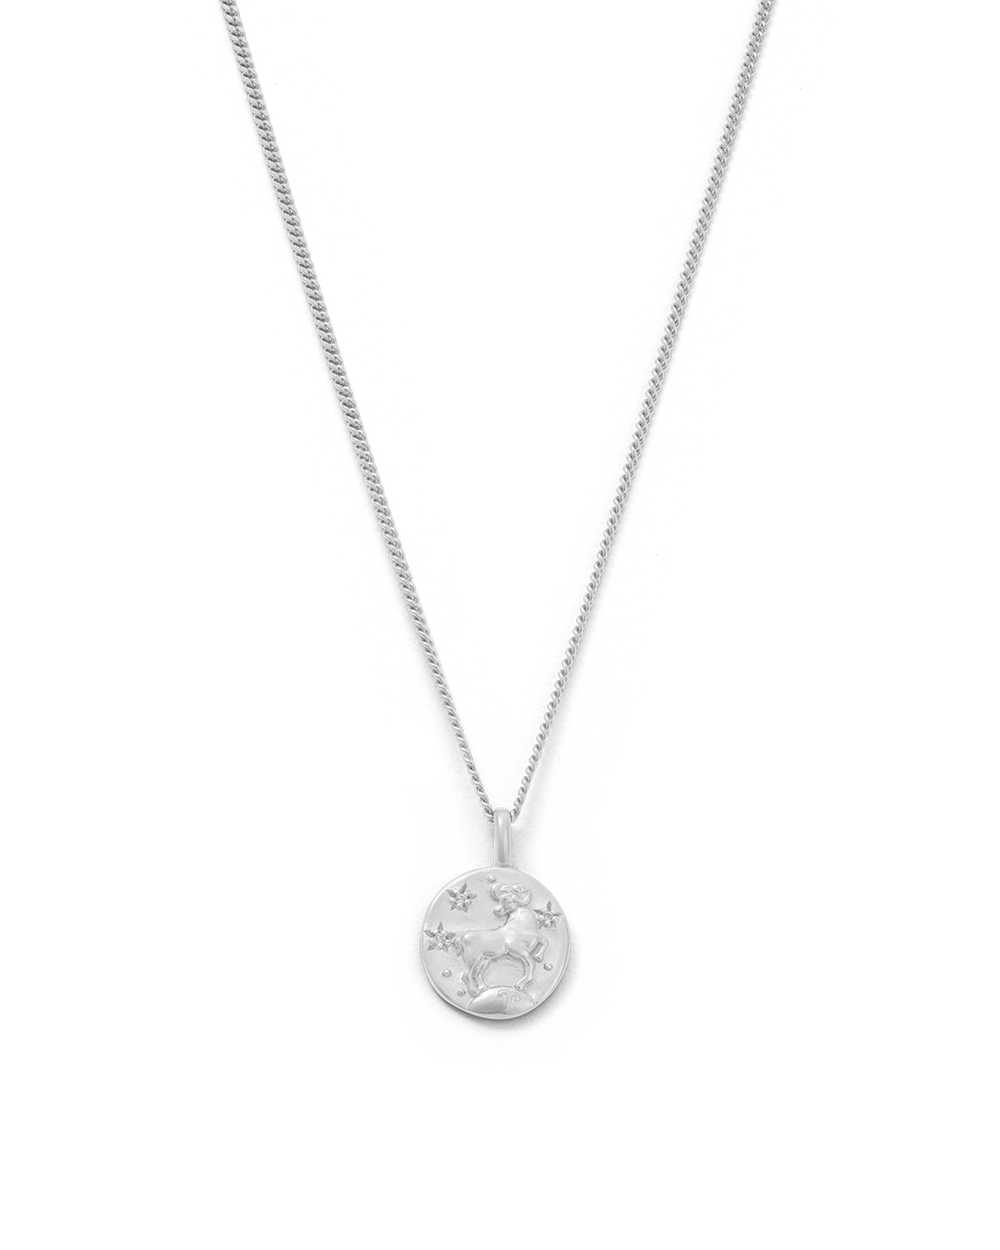 Aries Petite Zodiac Necklace - Silver